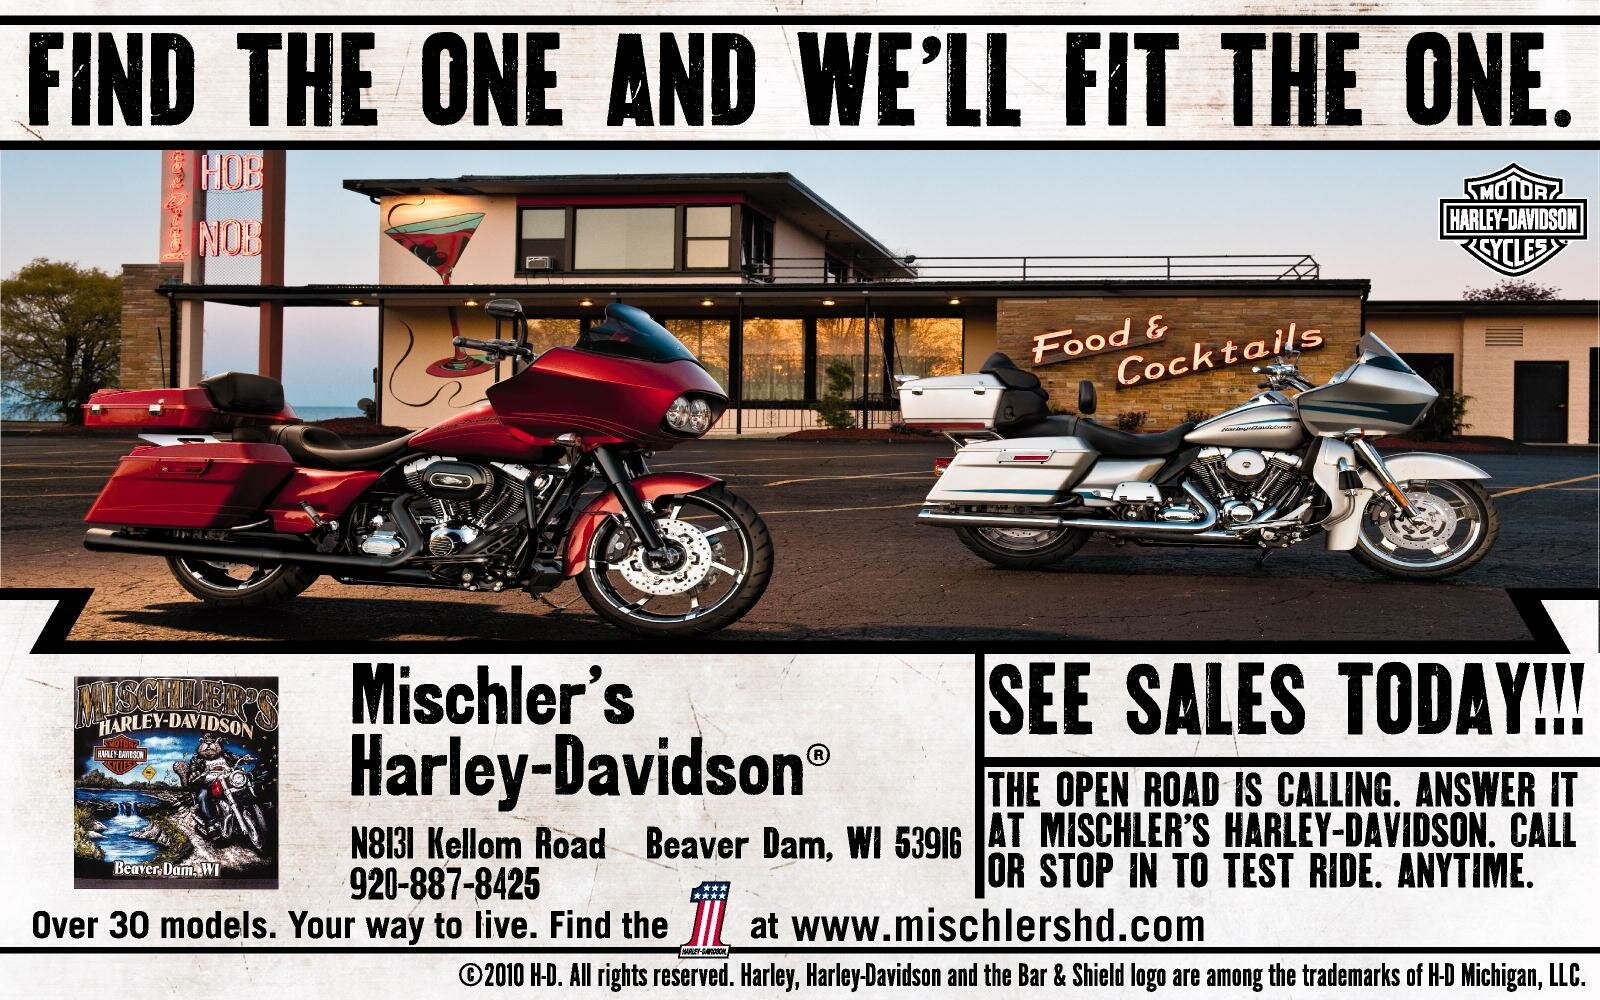 Mischler's Harley-Davidson of Beaver Dam, Wisconsin offers Harley-Davidson financing